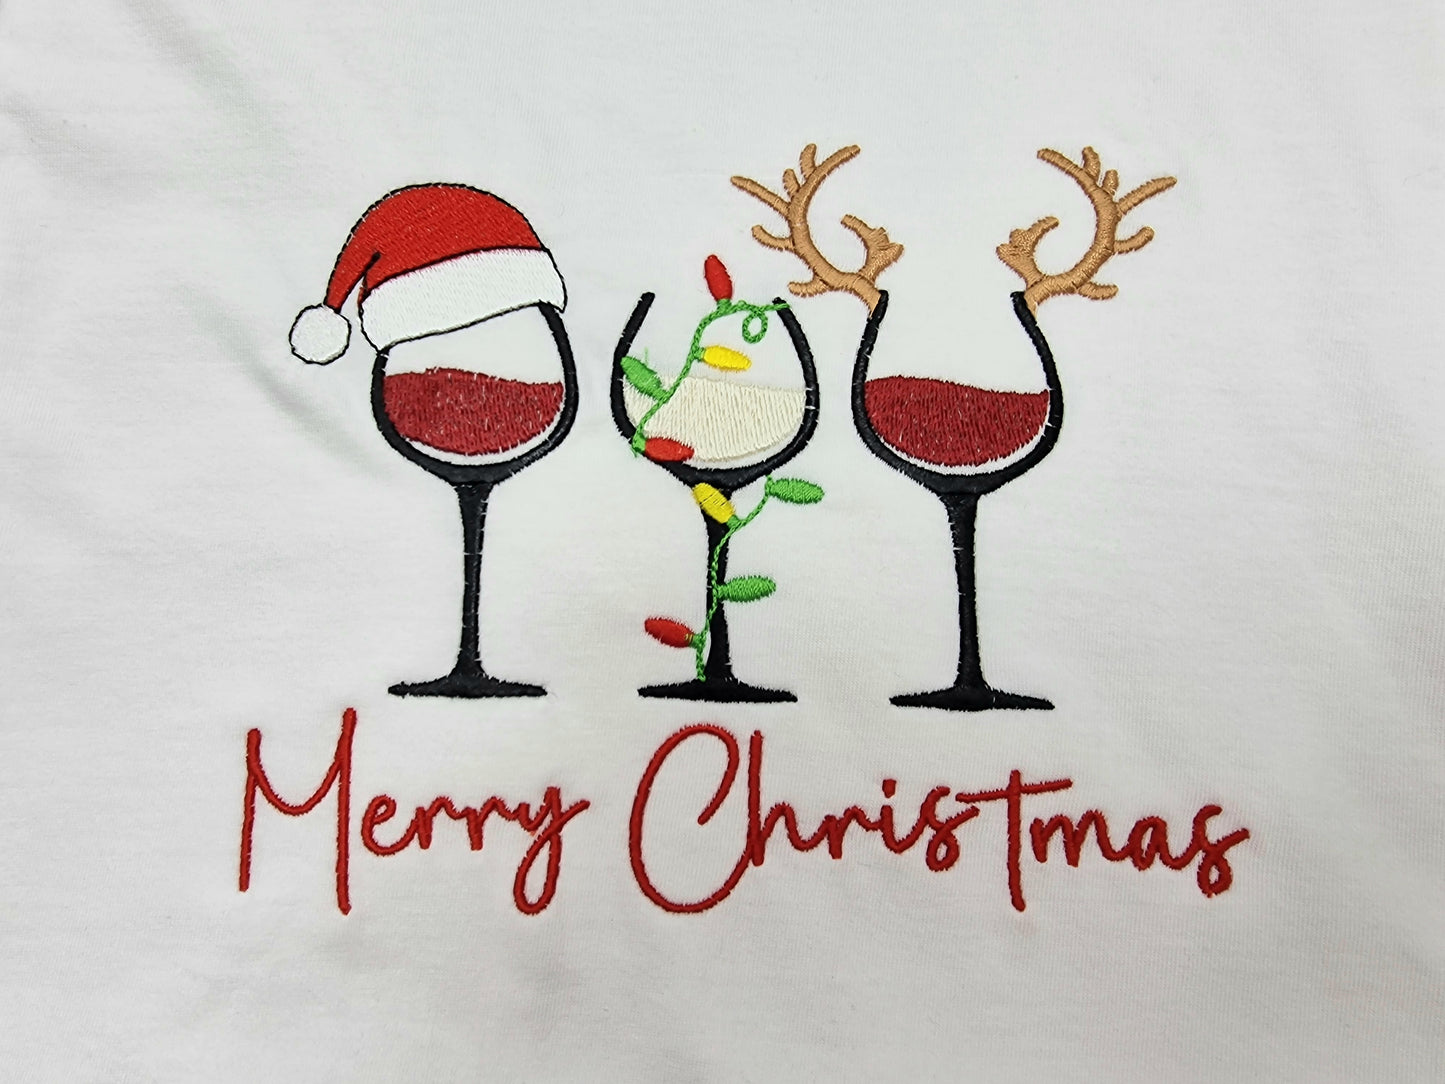 Merry Christmas wine glass T-shirt